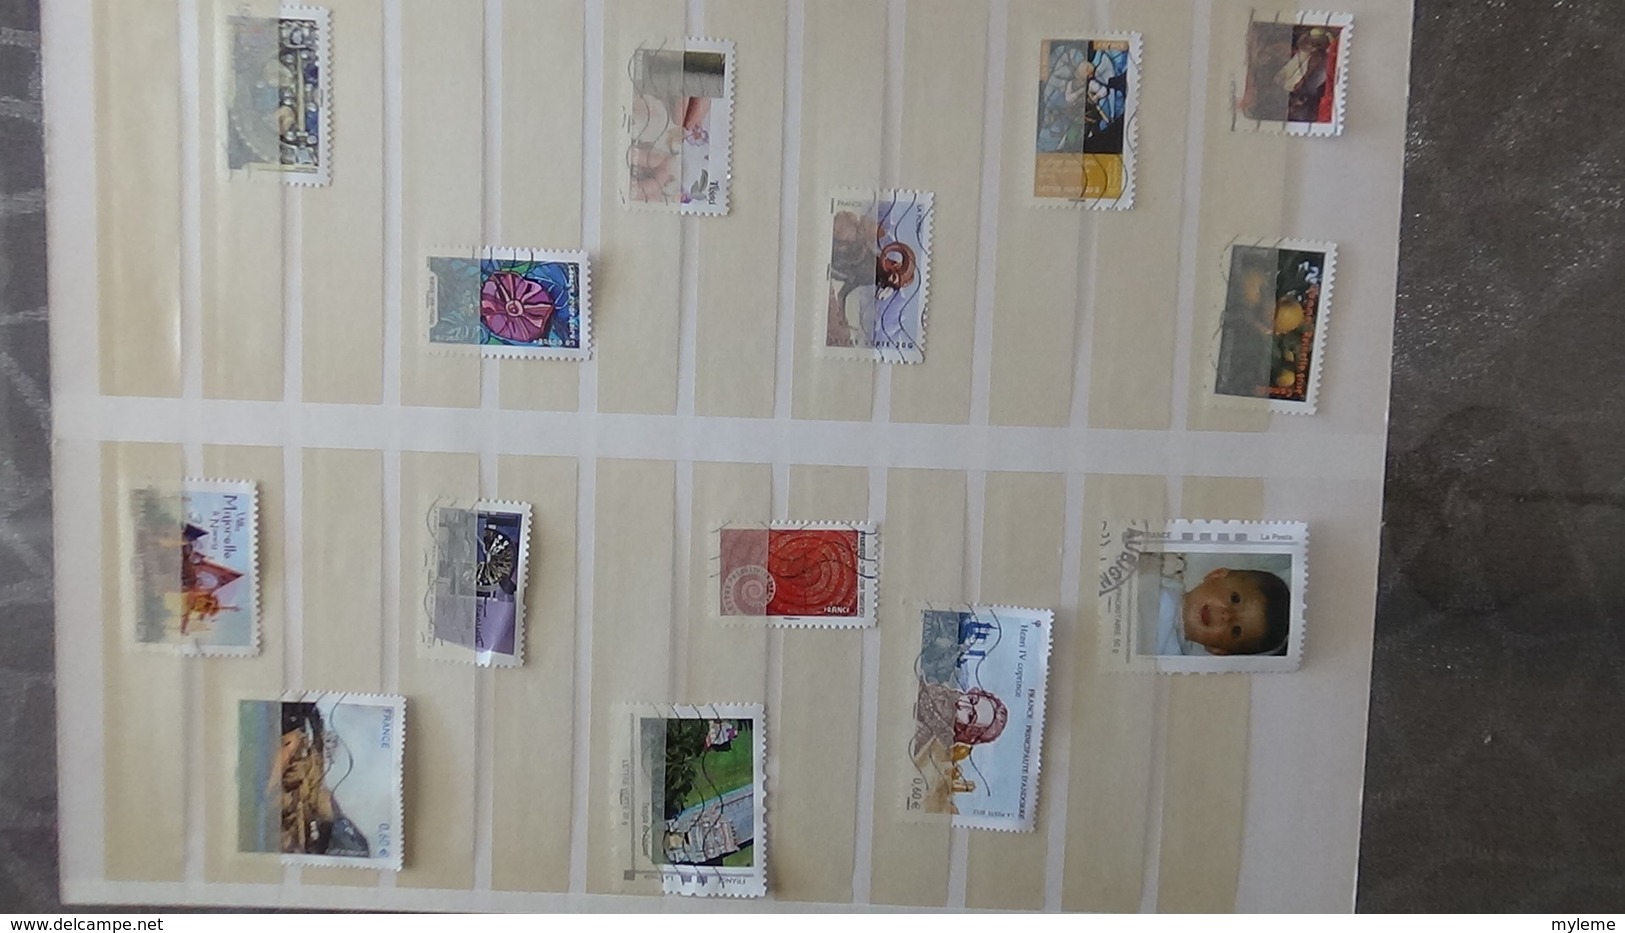 Des dizaines de timbres oblitérés (33 photos) de France en euros. A saisir !!!